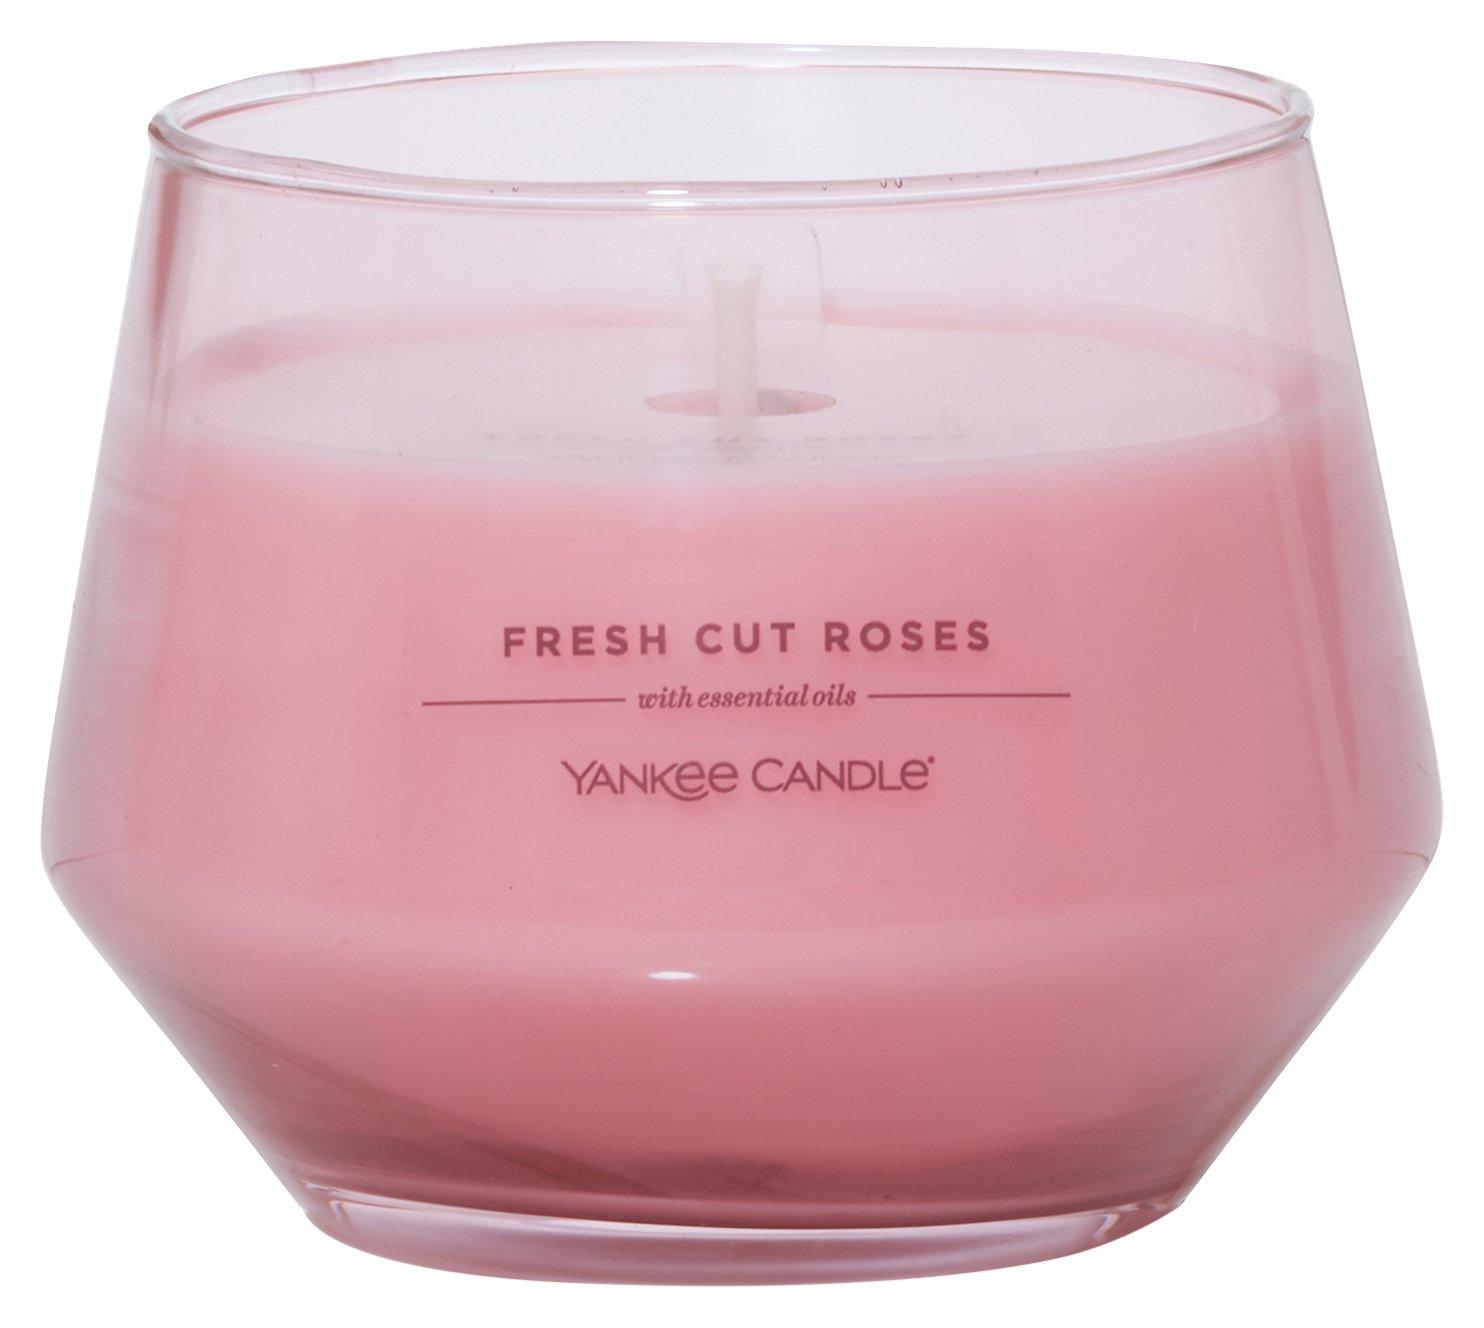 Yankee Candle Jar Candle, 19 oz. - Pink Island Sunset